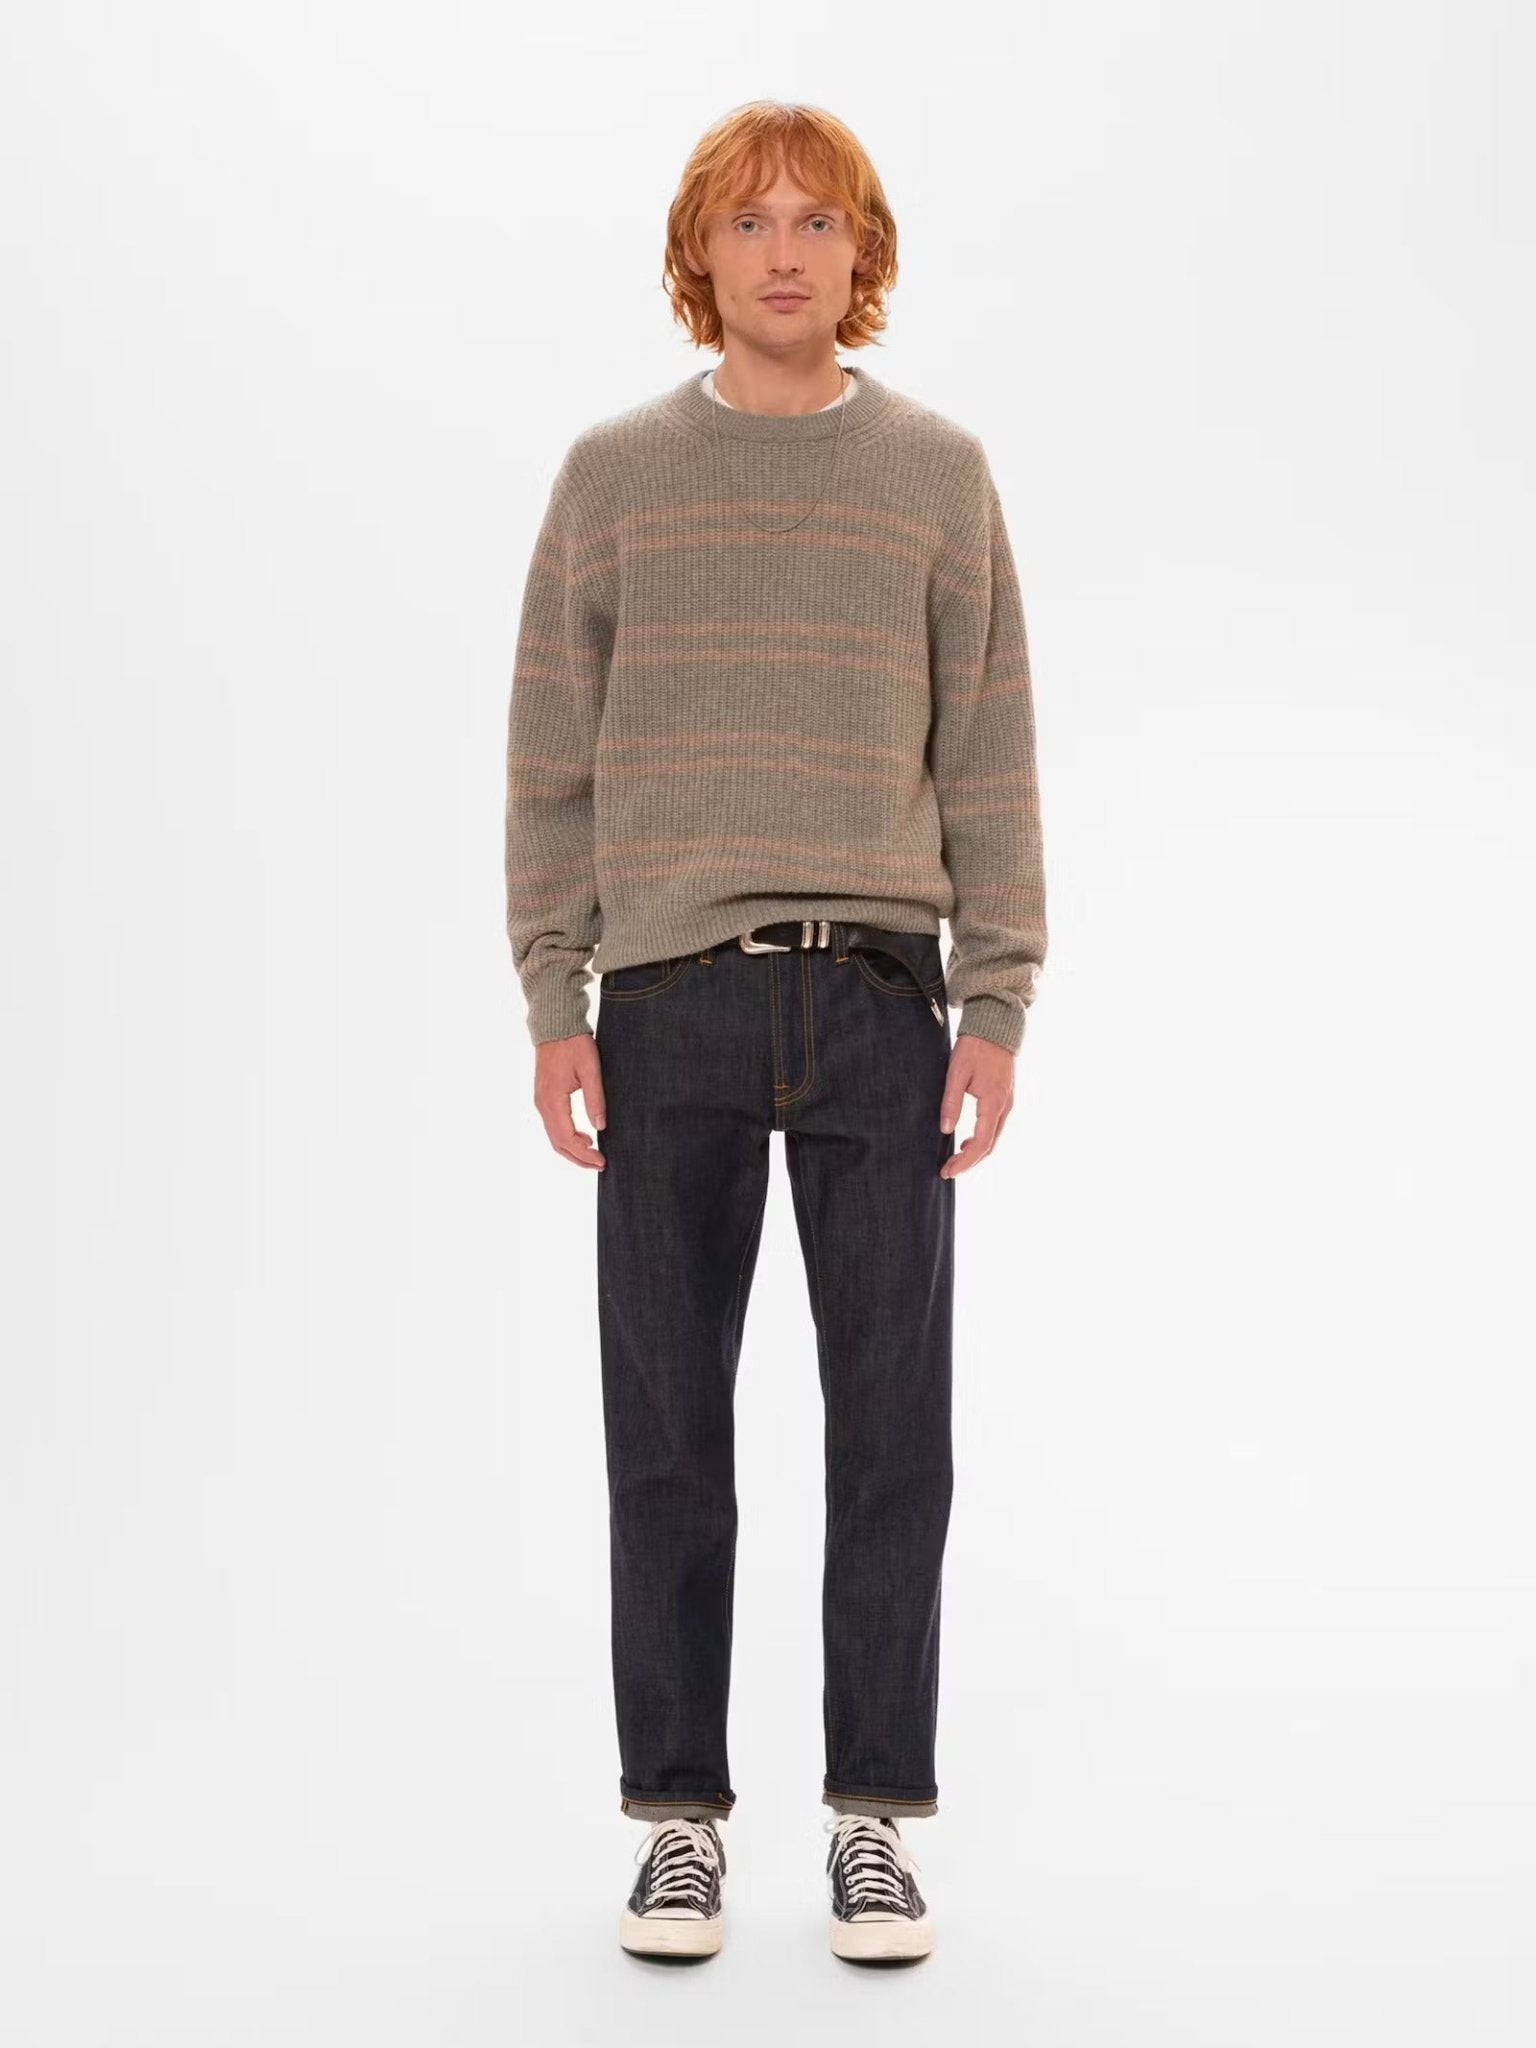 Gurra Striped Sweater - Nudie Jeans - Danali - 150568-GreenMelange-S